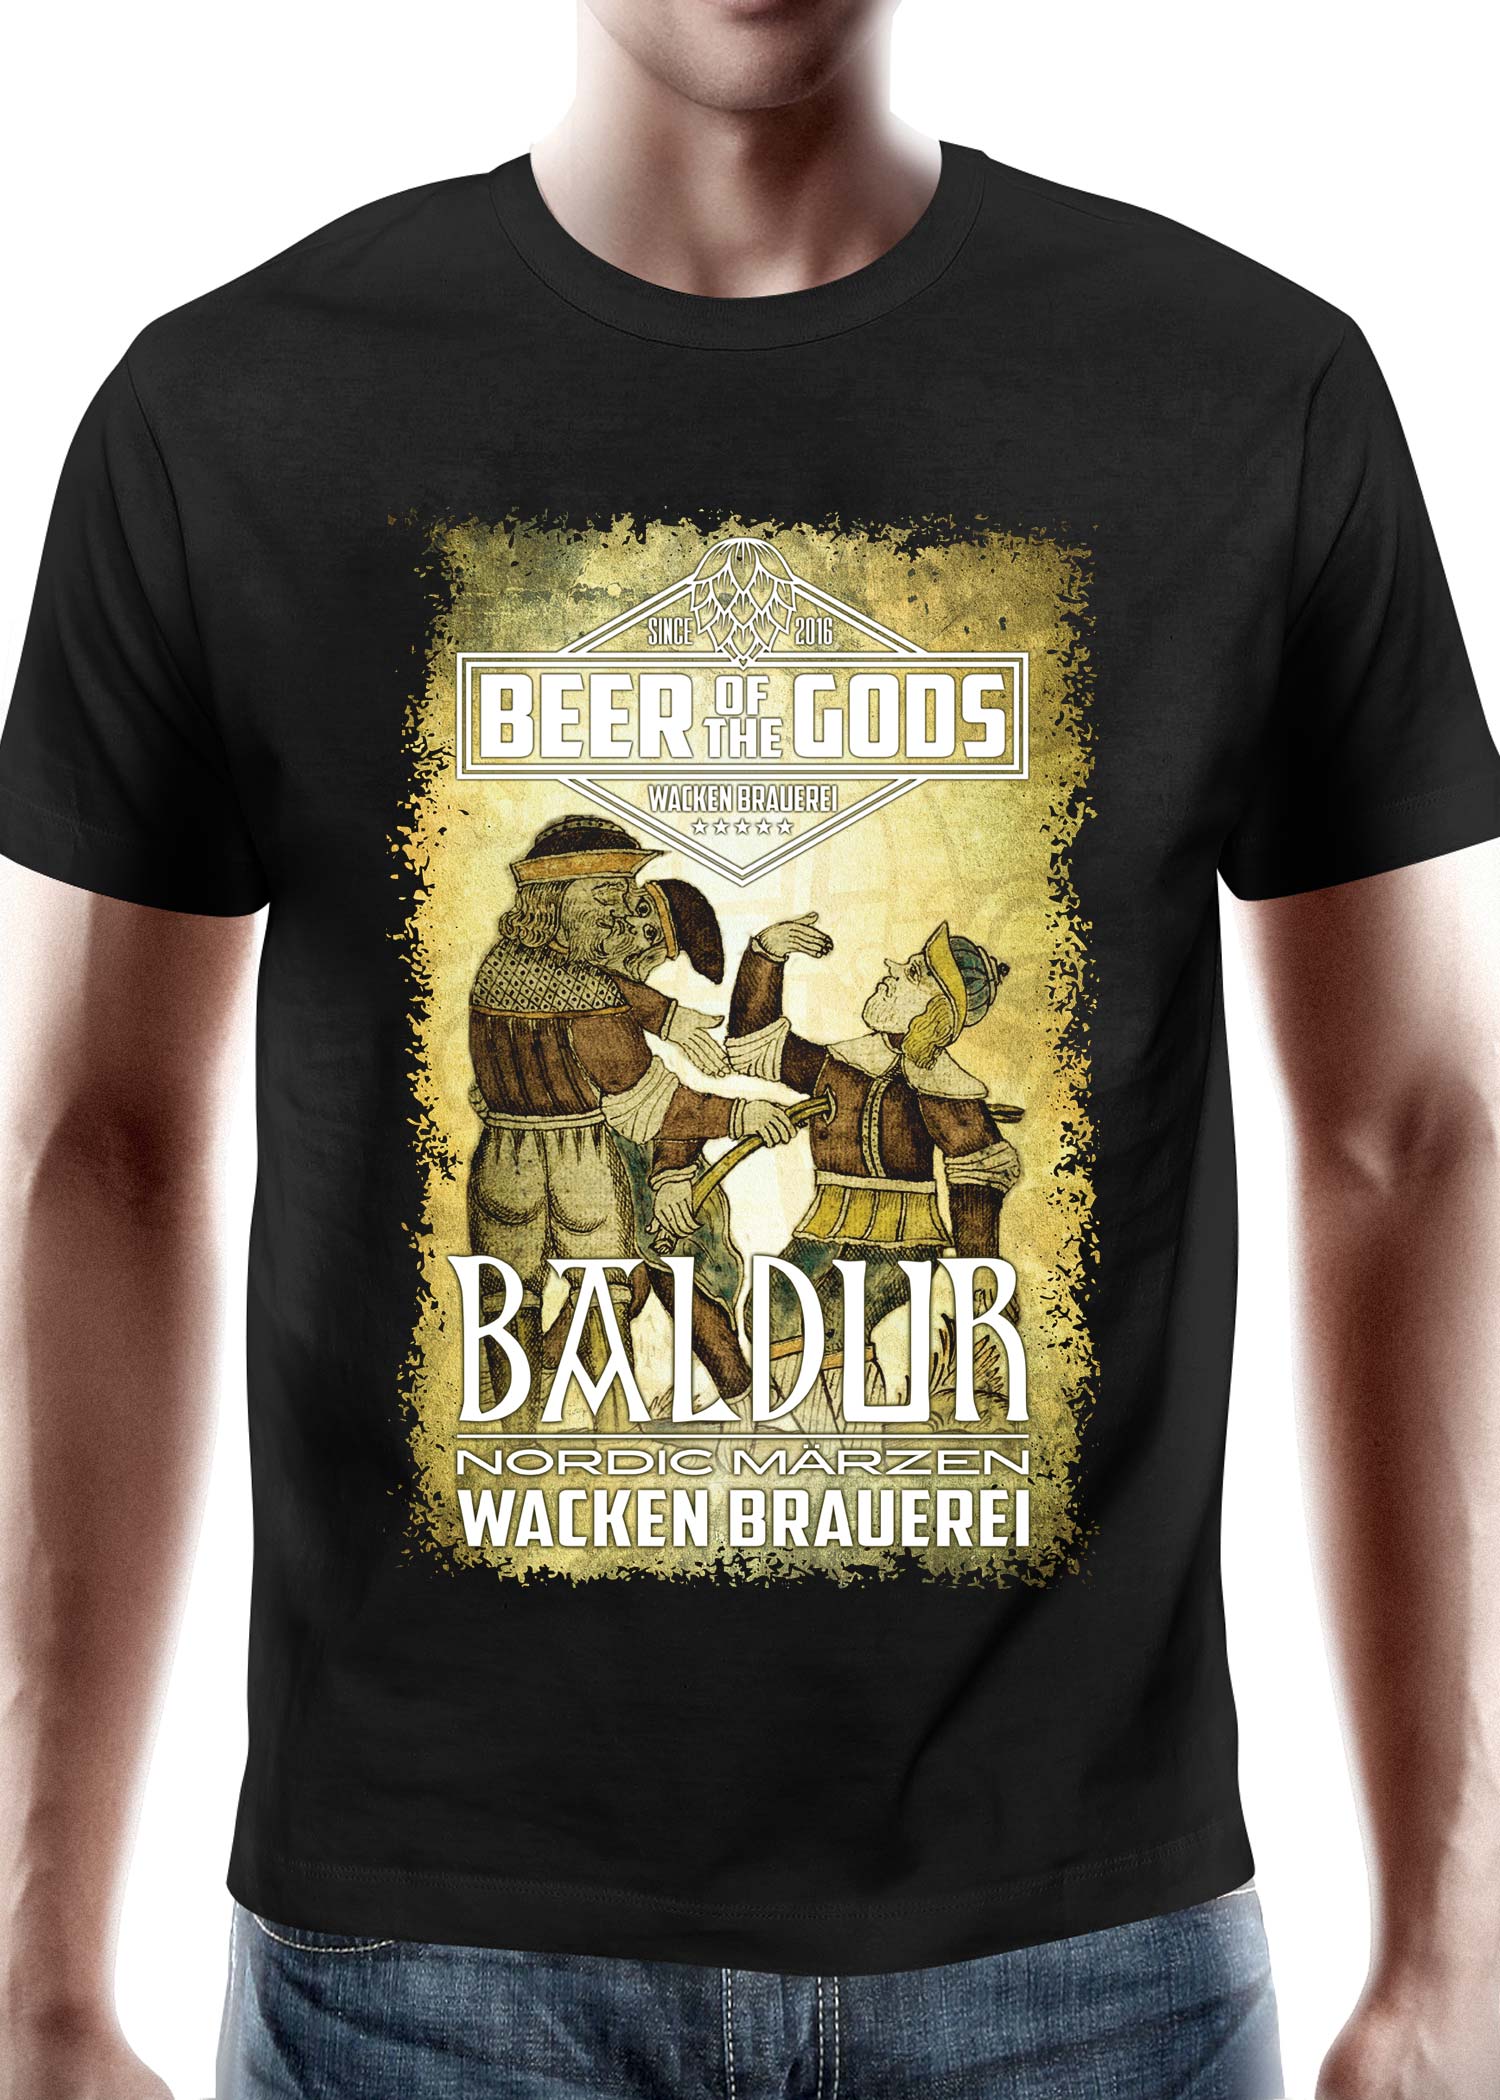 Baldur - Wacken Brauerei, T-Shirt, Größe S